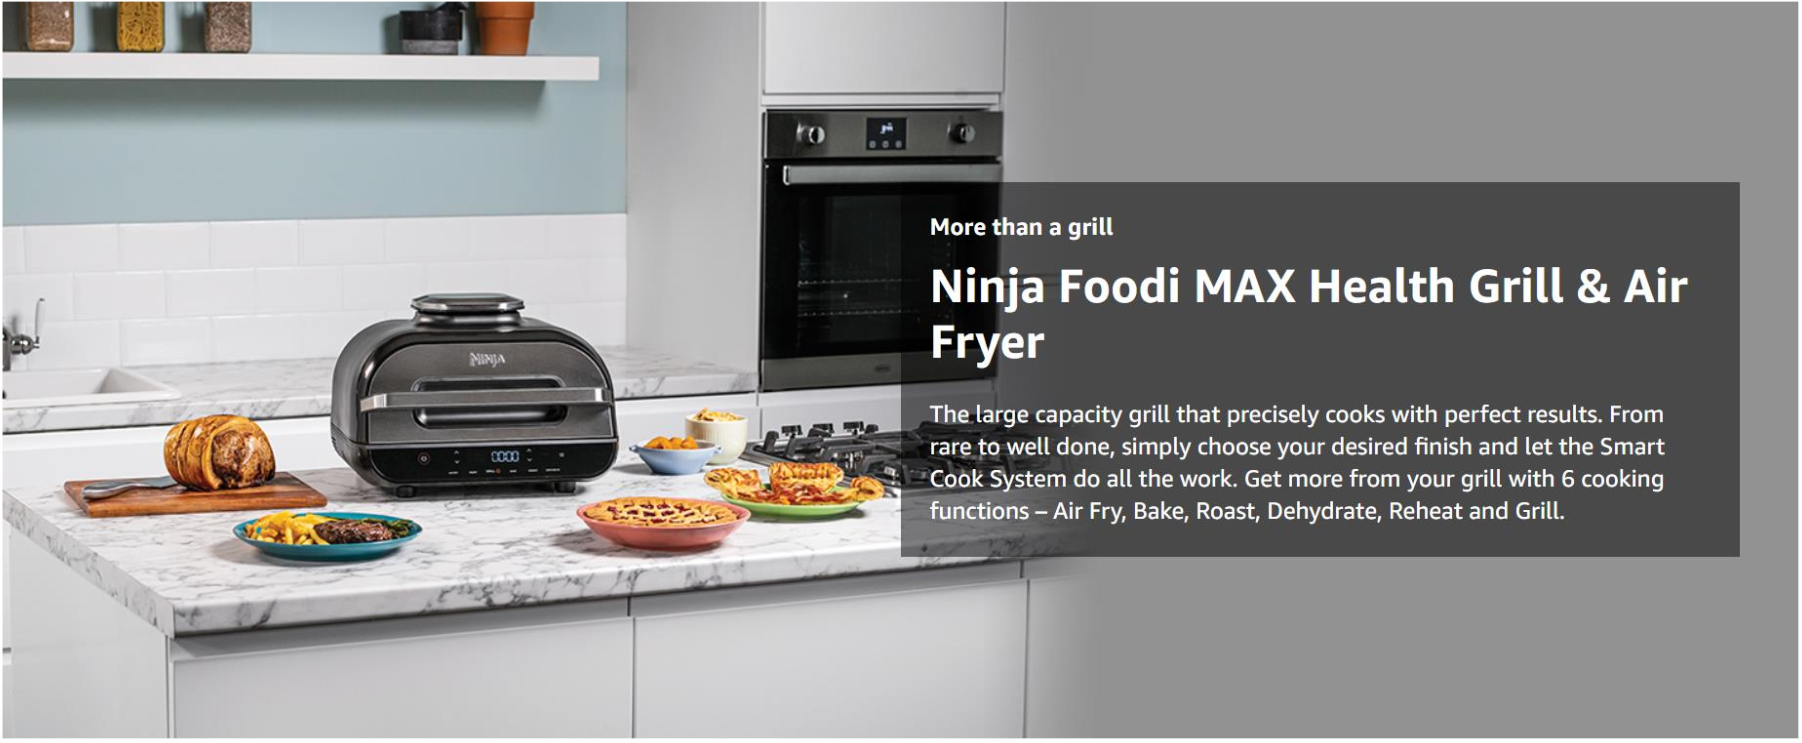 Ninja Foodi Max Health Grill & Air Fryer AG551UK Review & Demonstration 